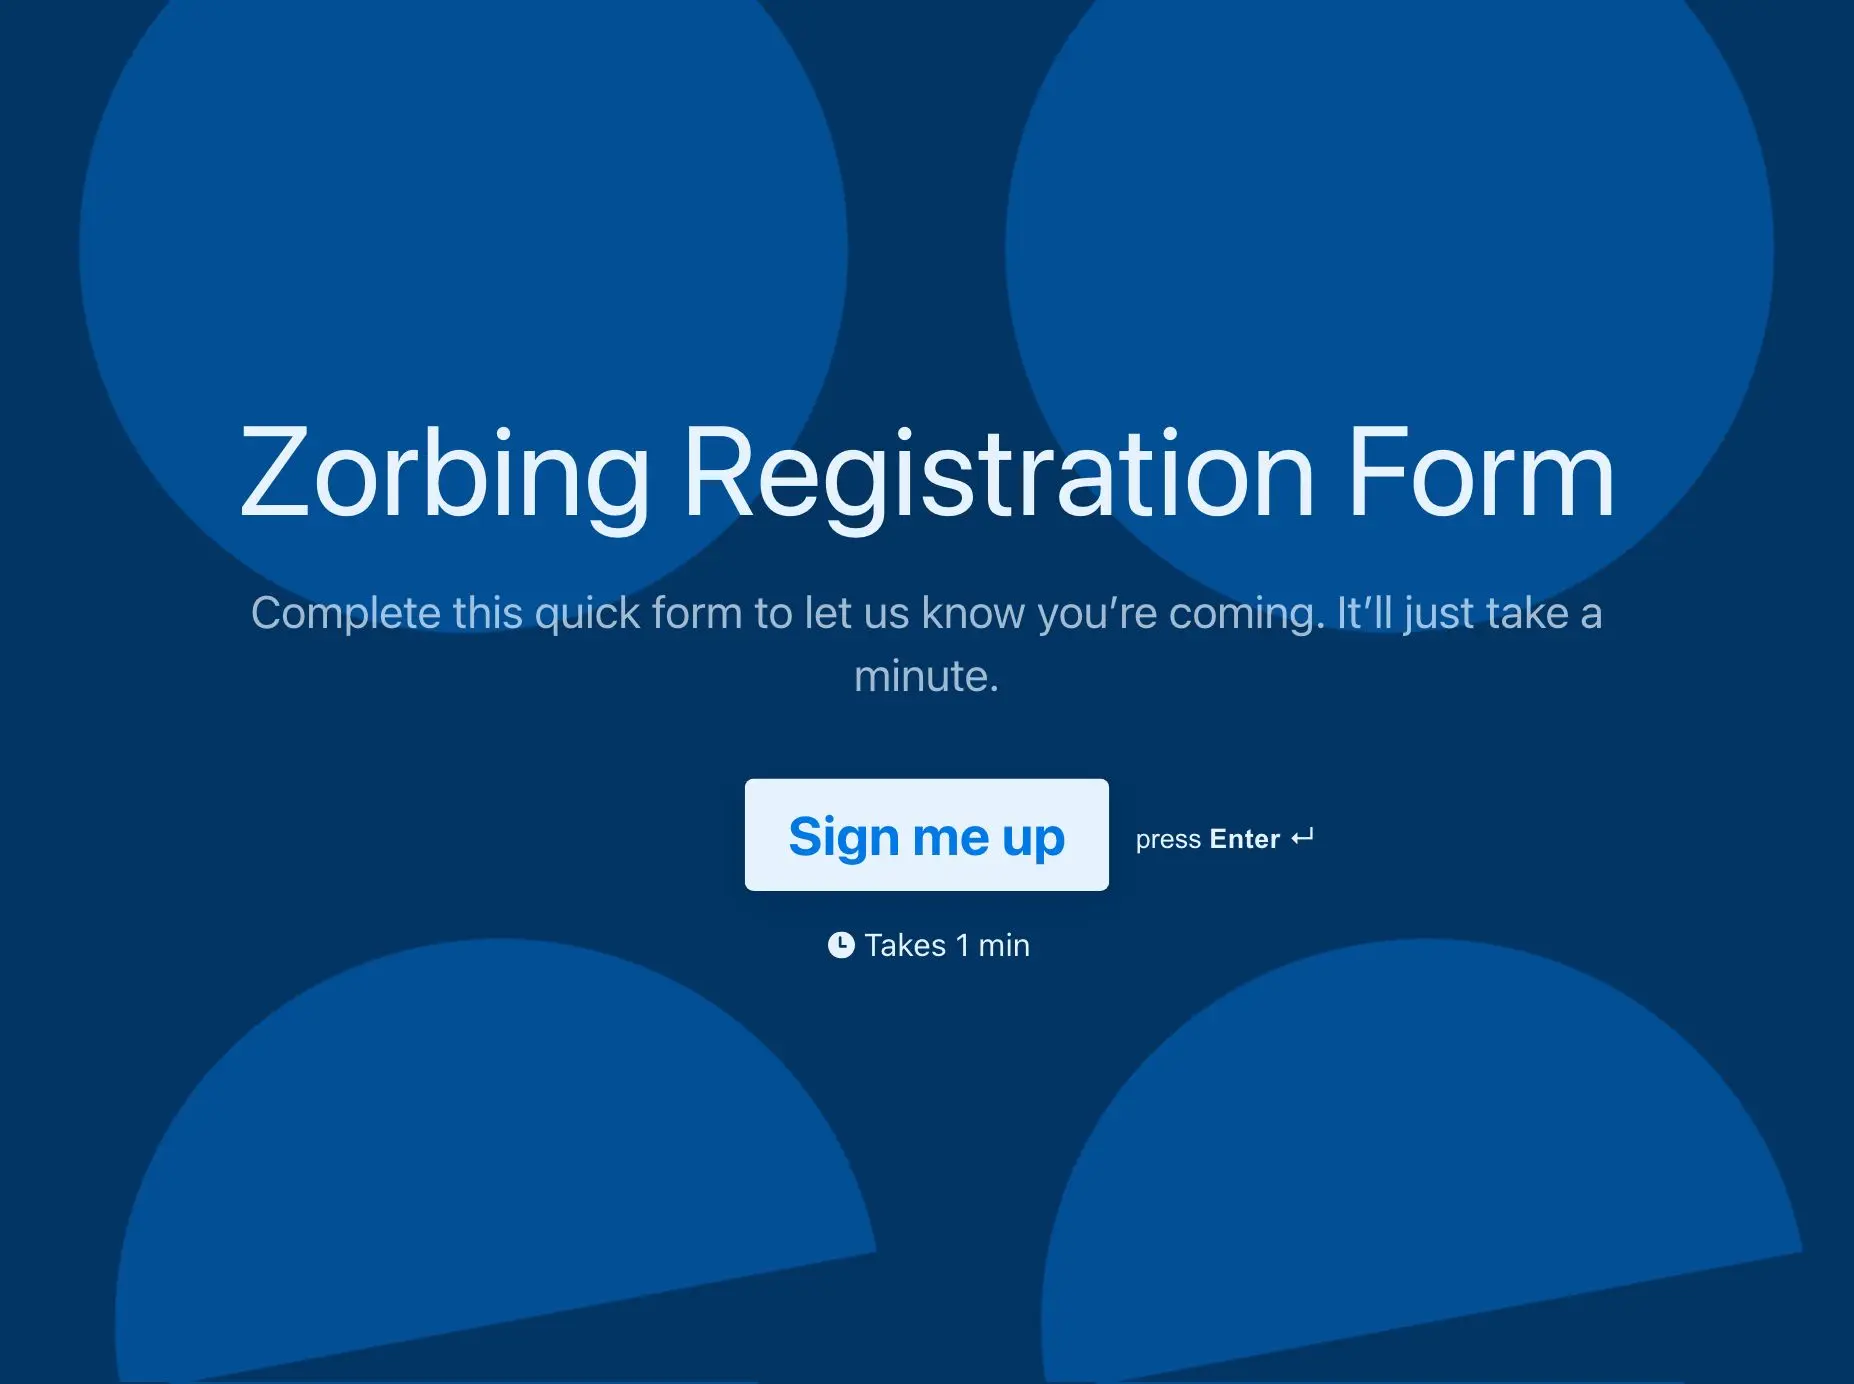 Zorbing Registration Form Template Hero